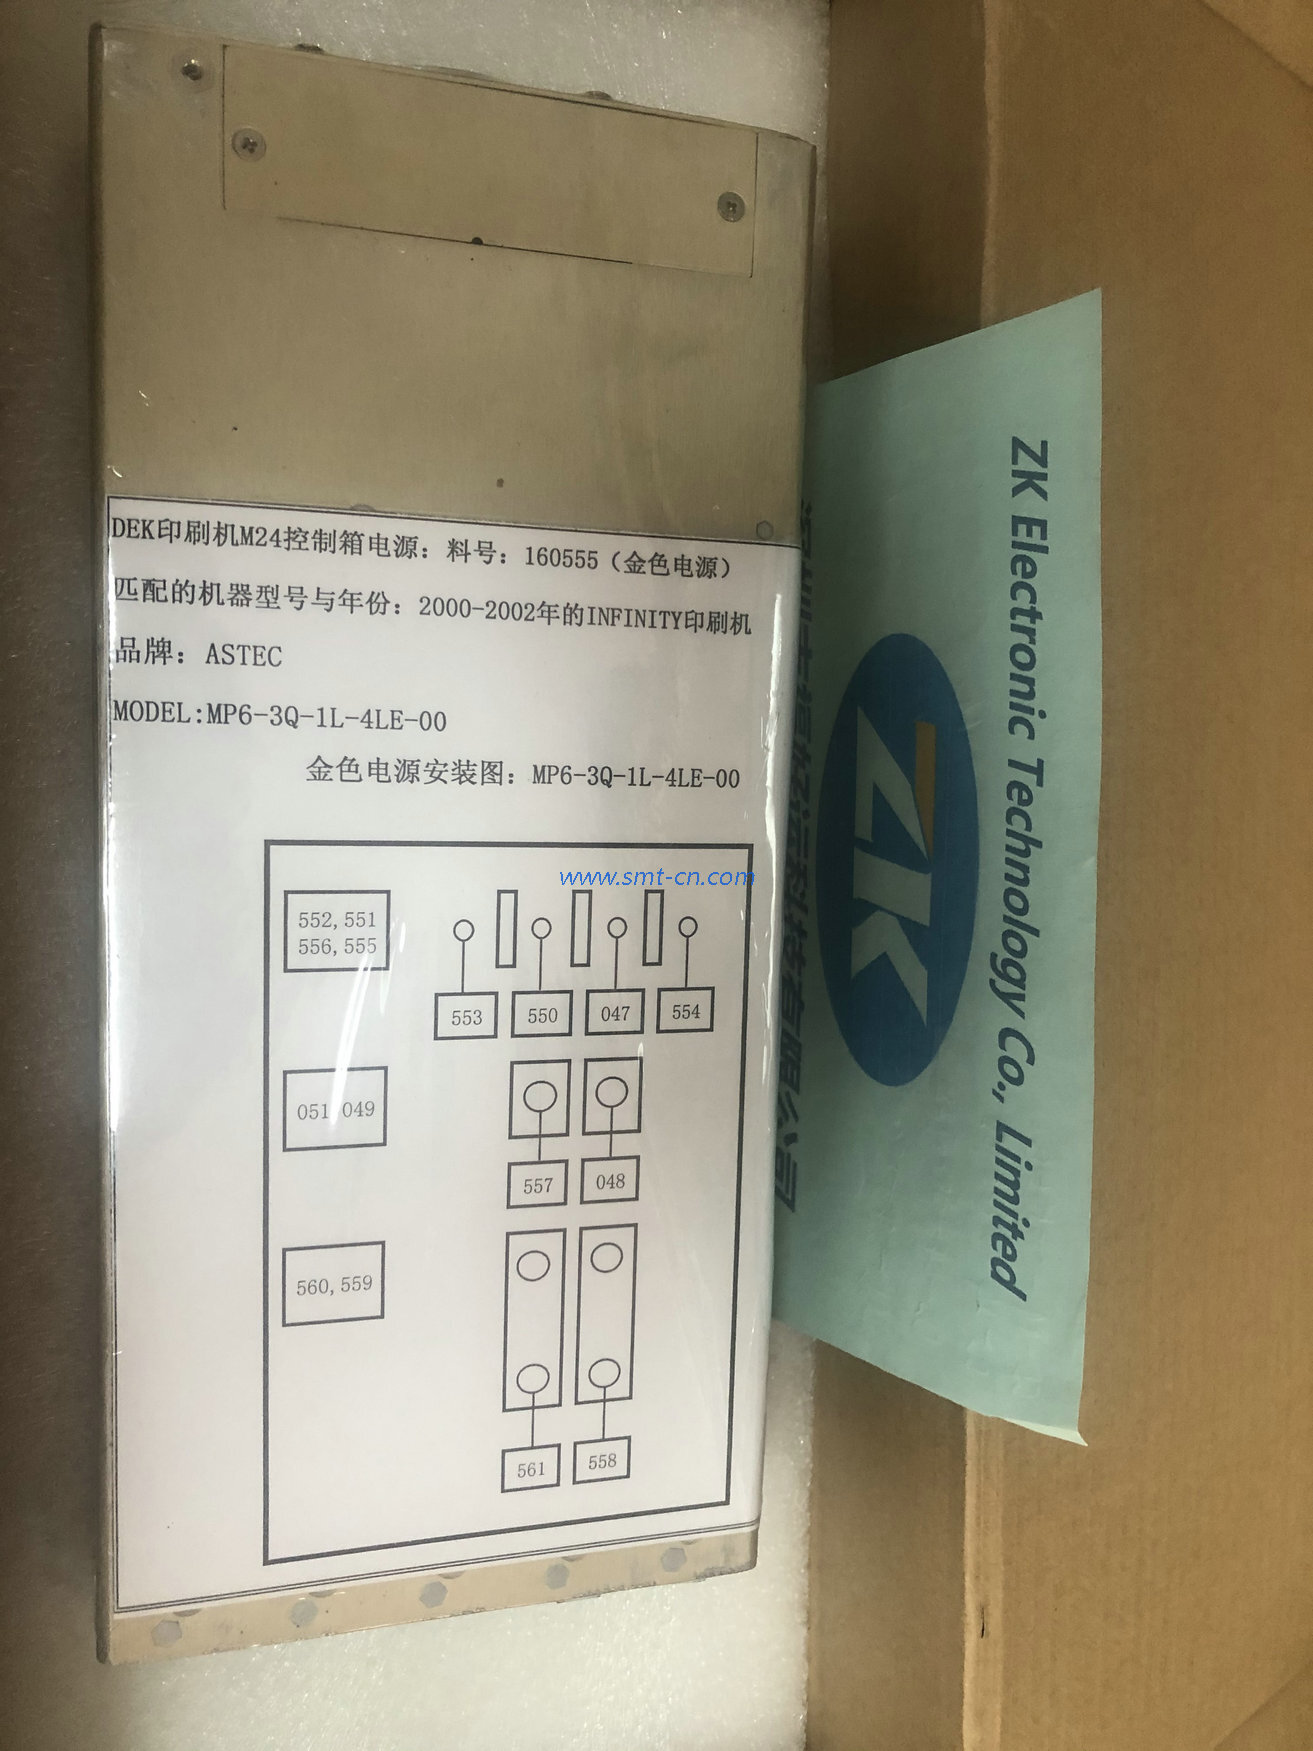 MP6-3Q-1L-4LE-00 DEK power supply 160555 (3)